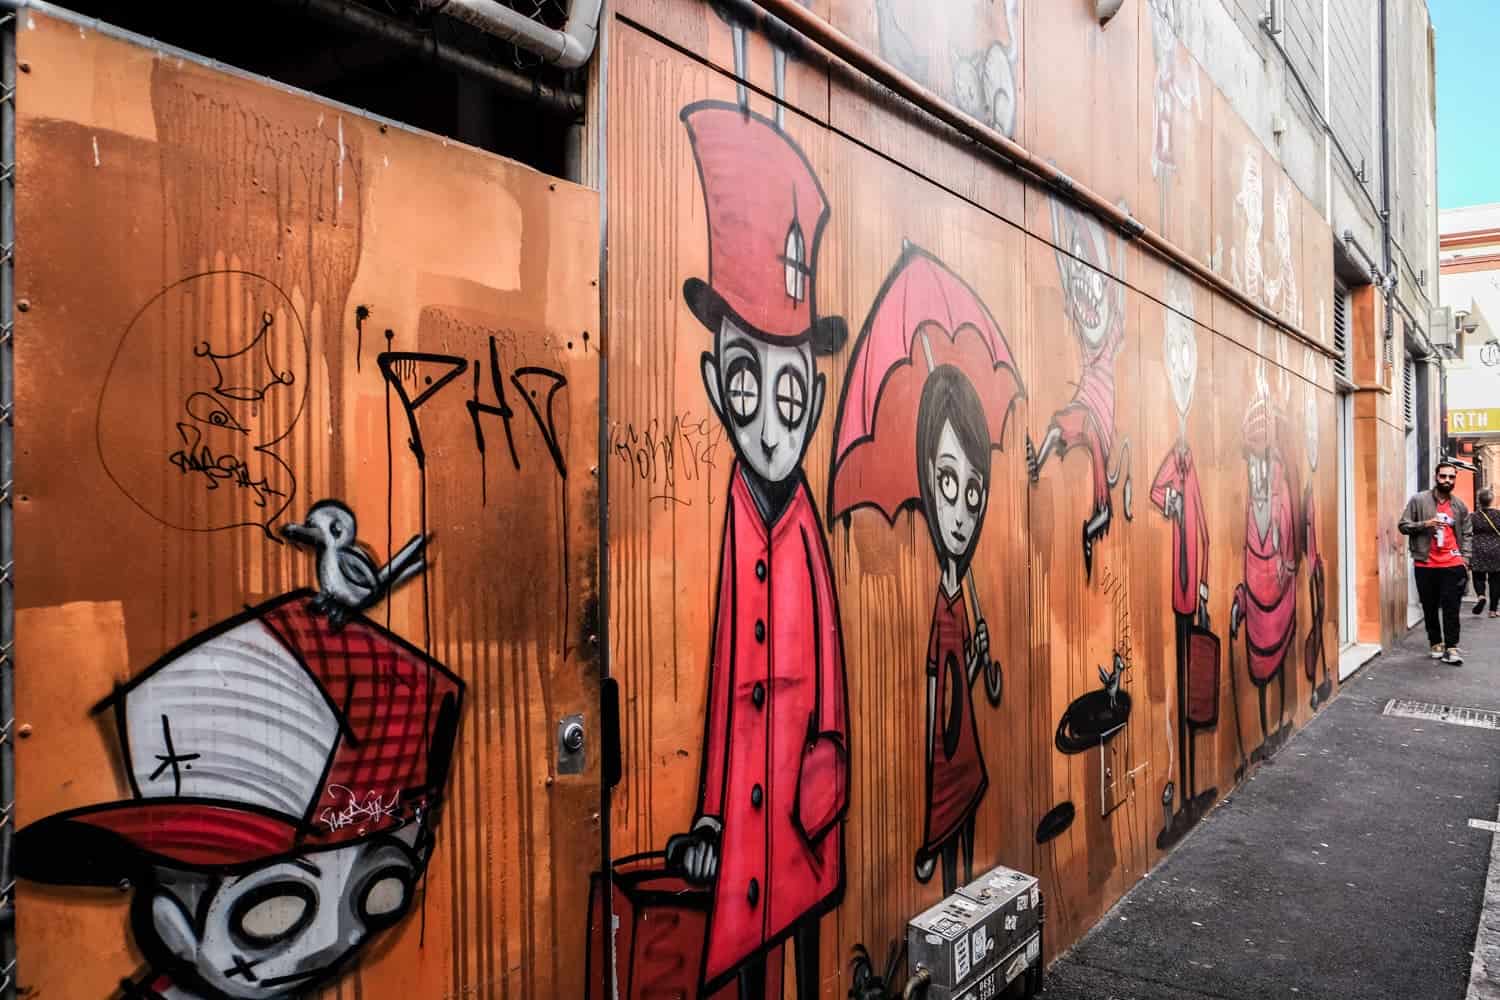 Street art on one of the alleyways walls in Perth, Australia